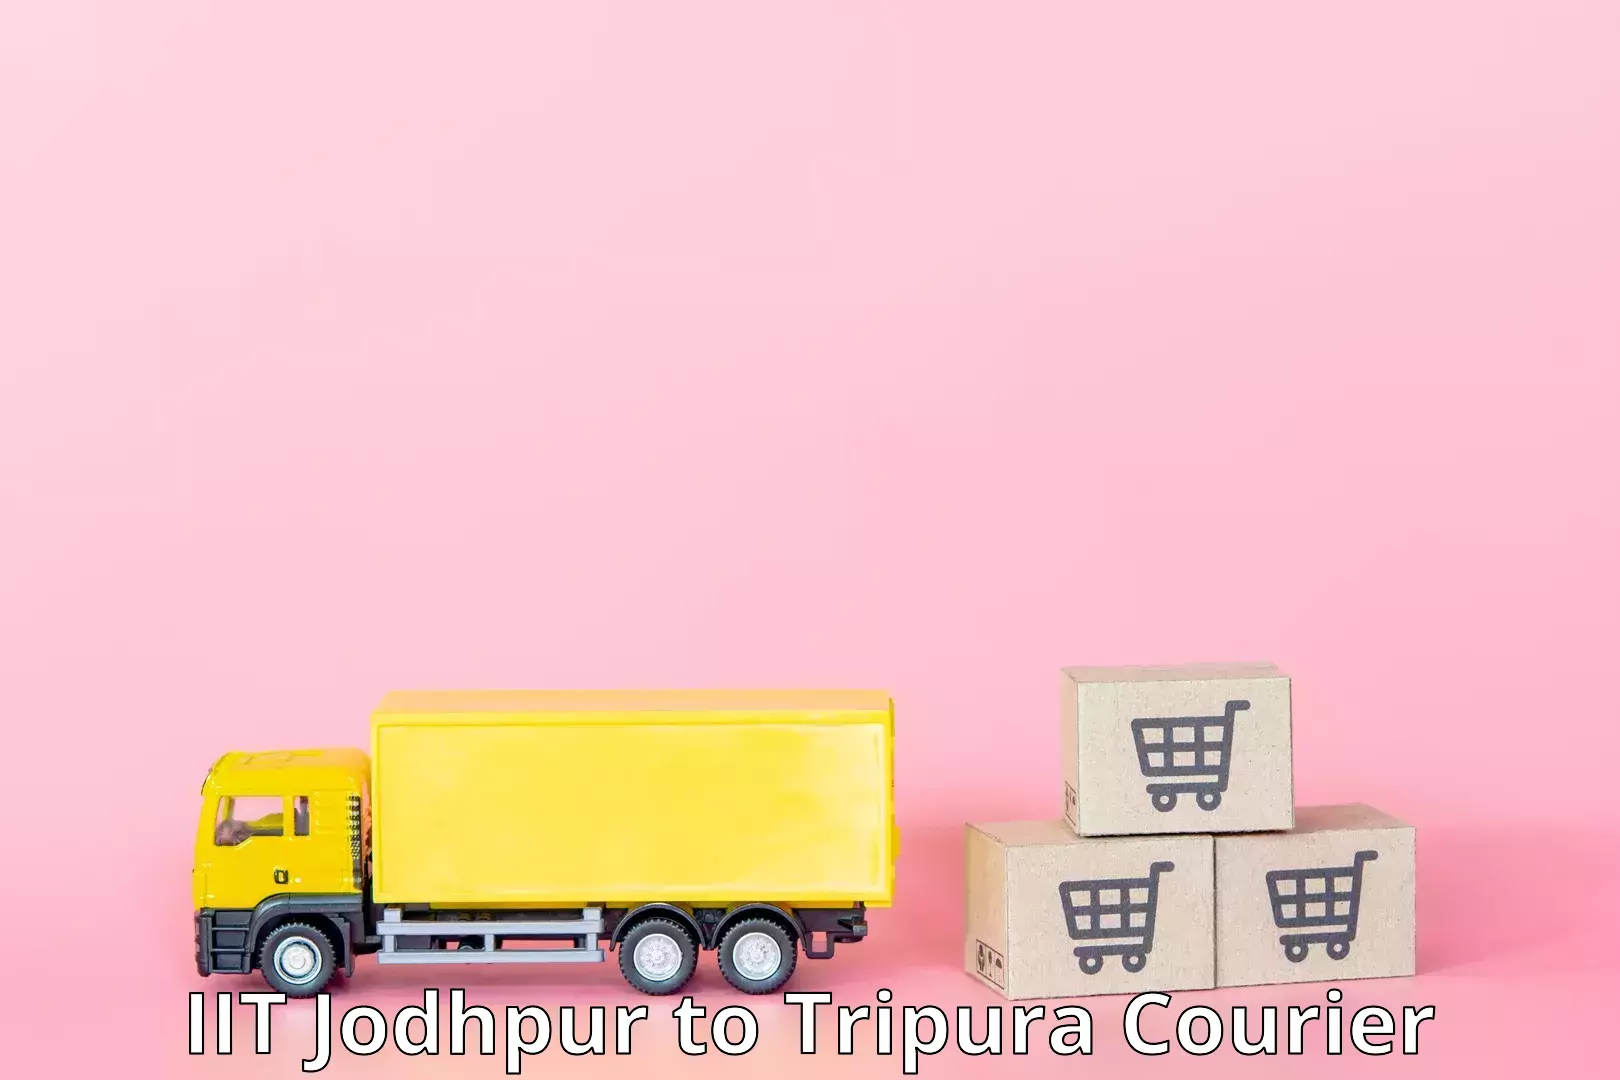 Global logistics network IIT Jodhpur to Tripura